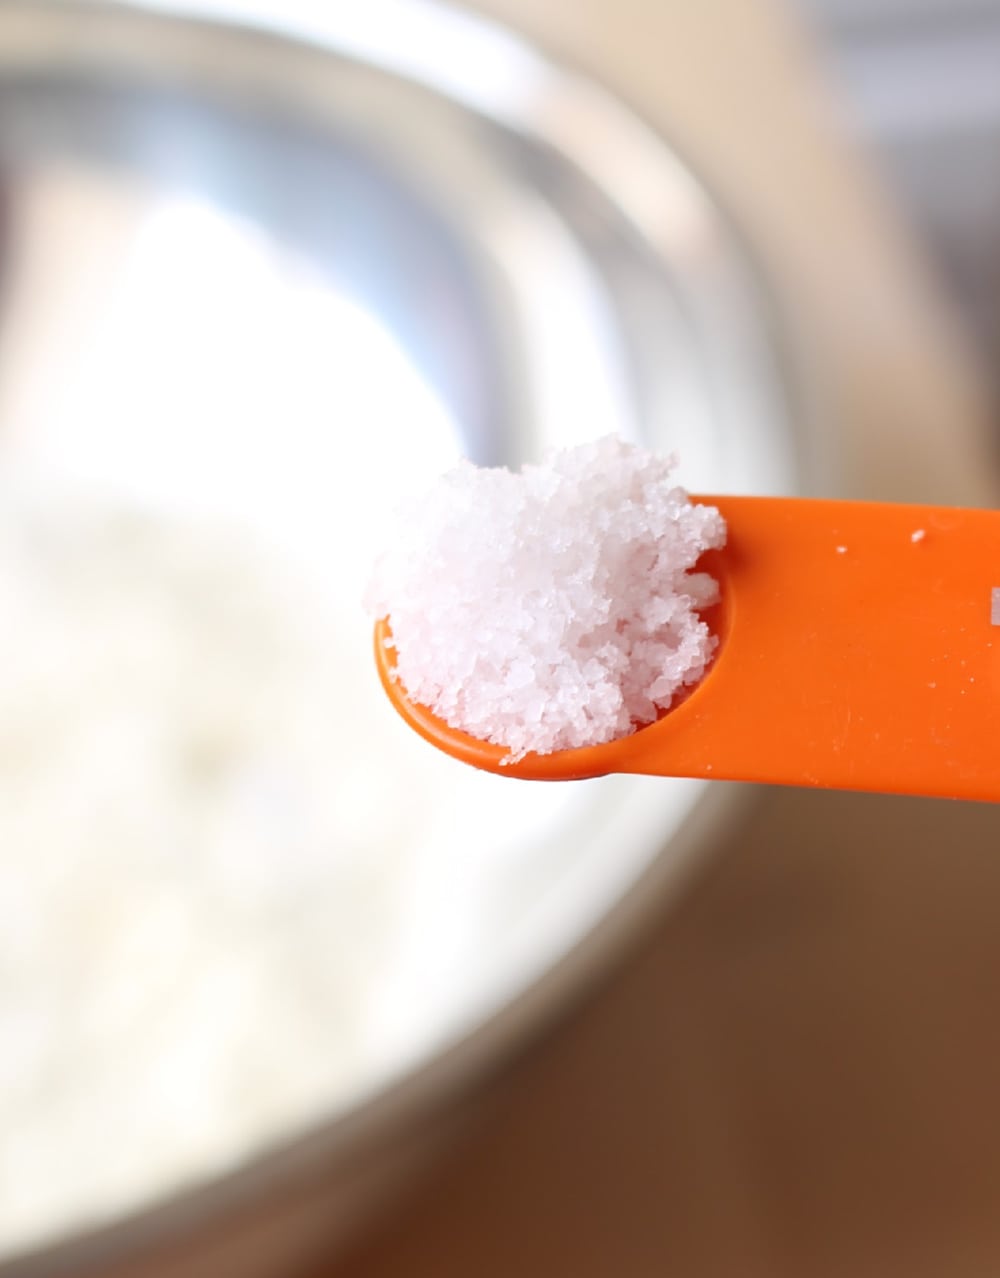 Orange measuring spoon with salt over a bowl of masa harina.